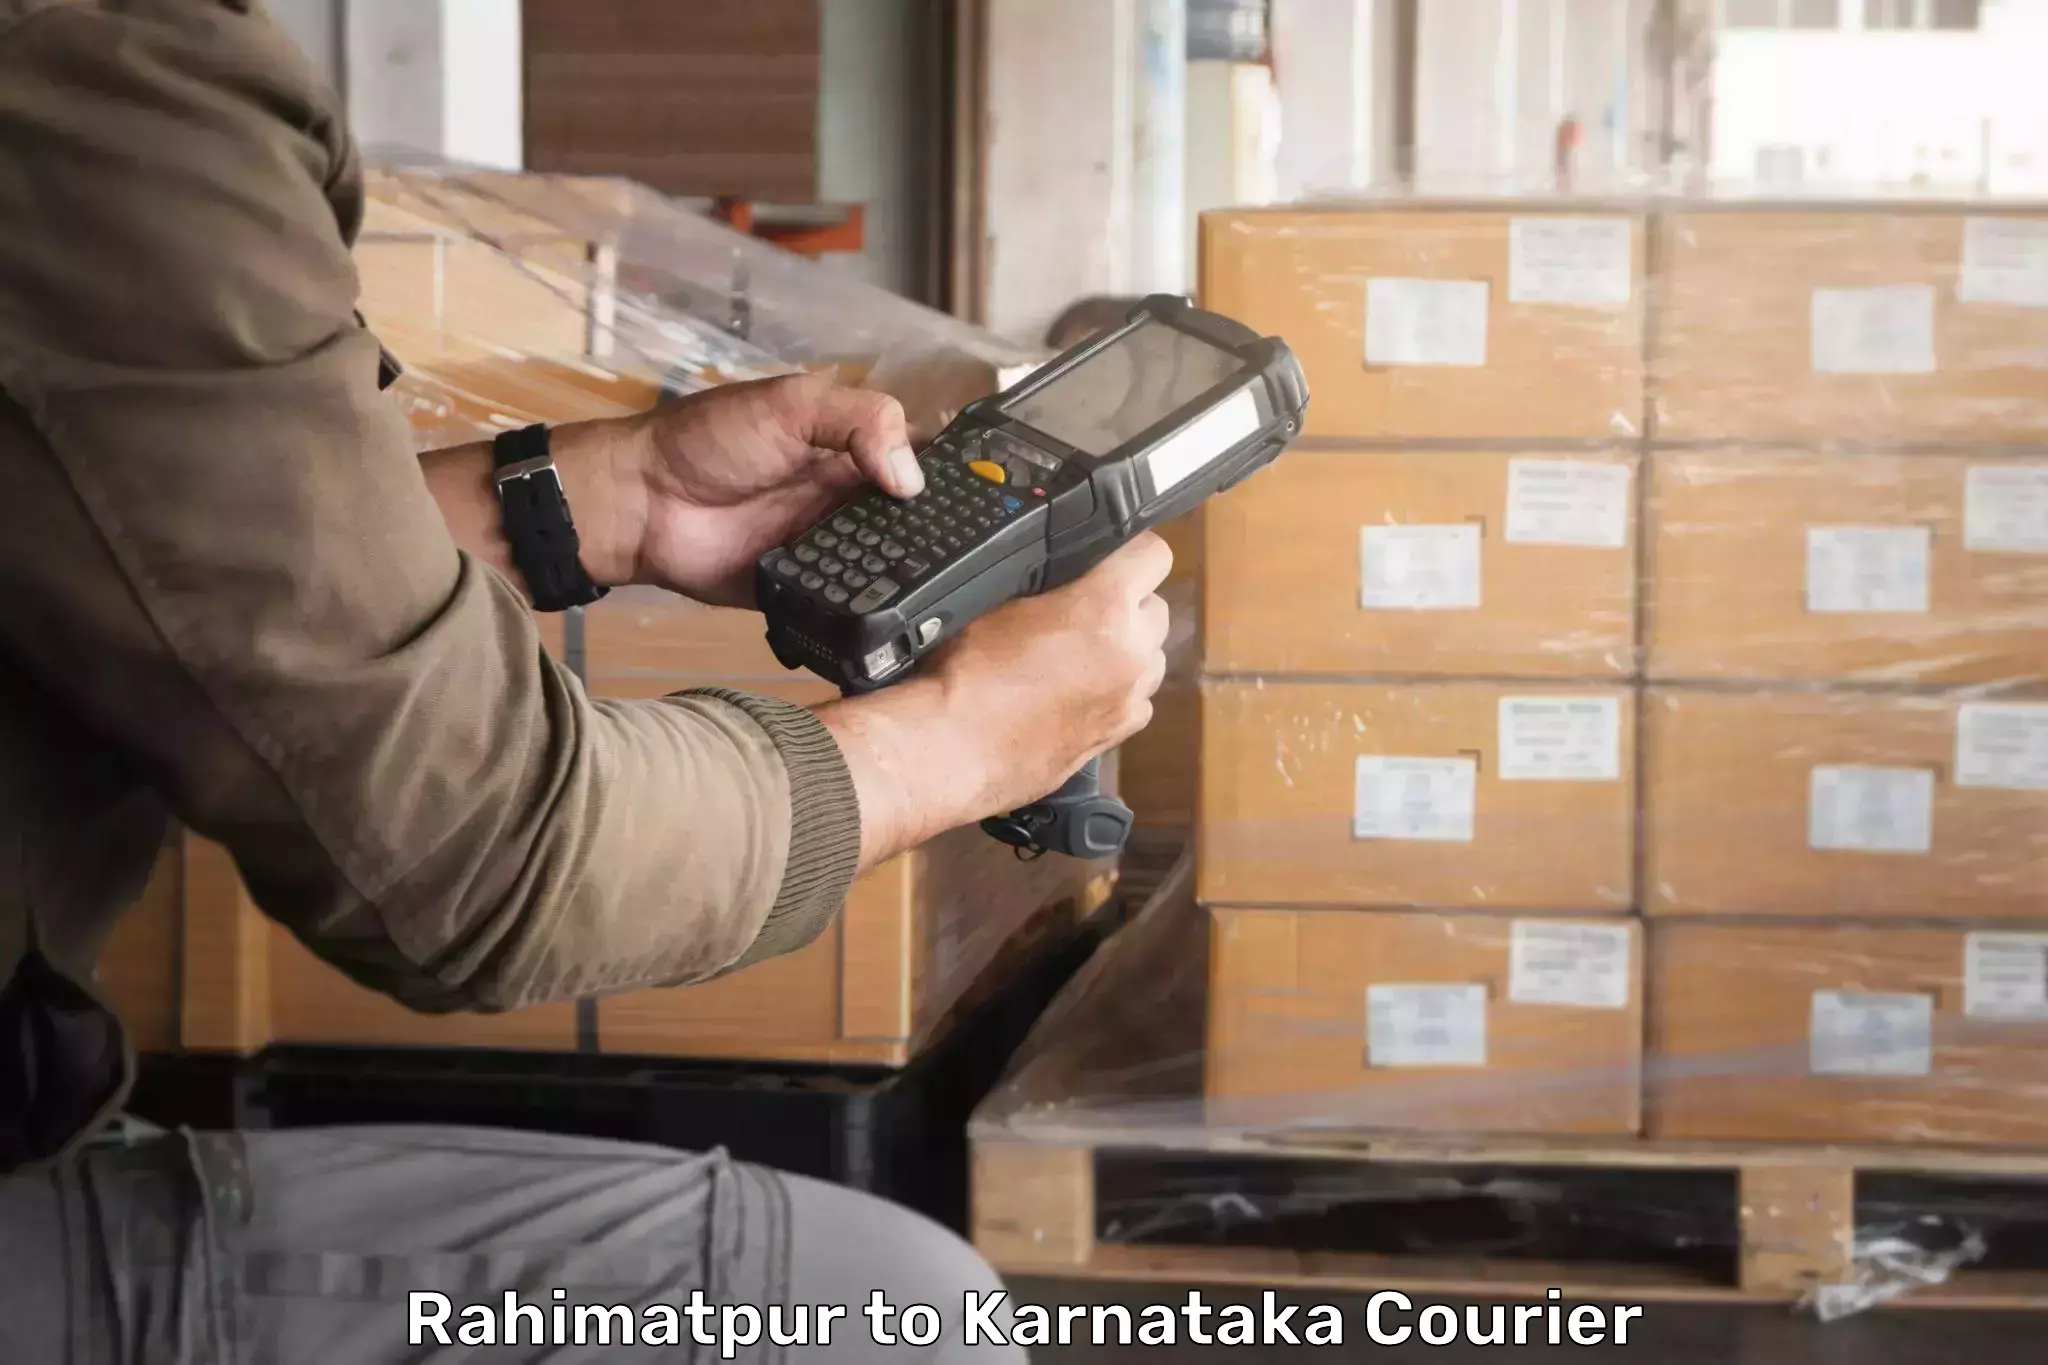 Smart shipping technology Rahimatpur to Hassan